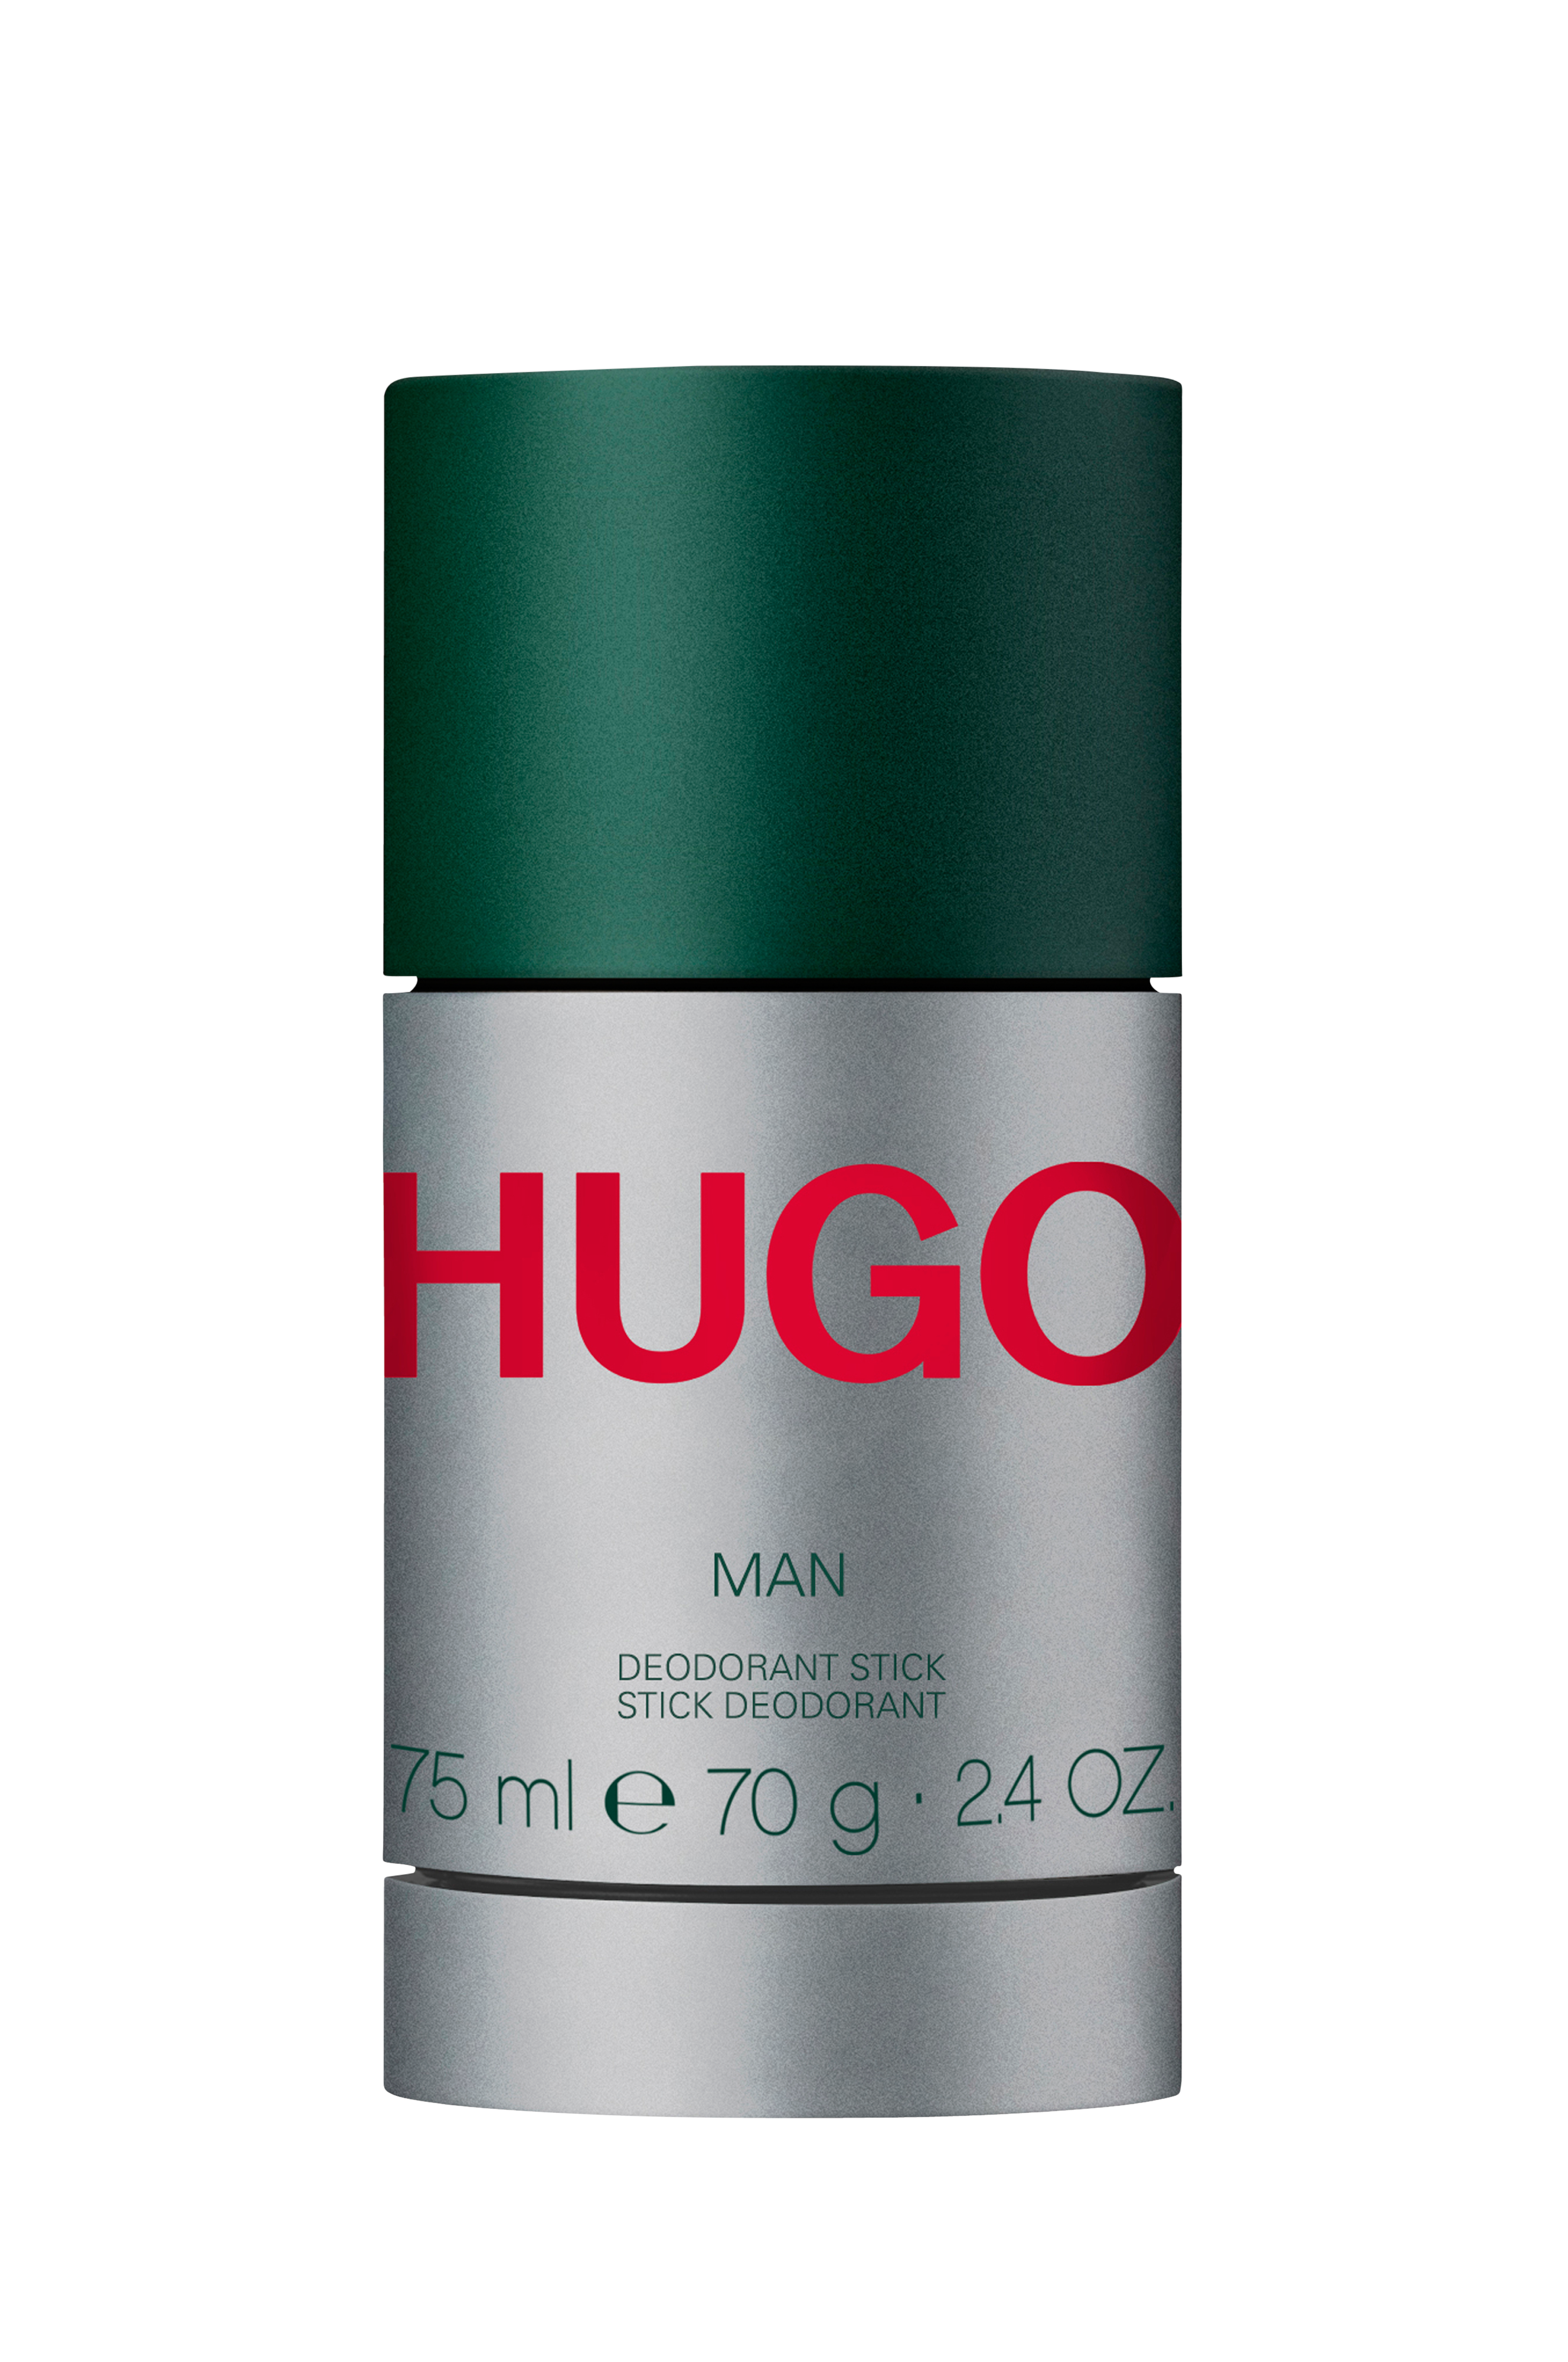 Hugo дезодорант. Босс Хуго босс дезодорант. Boss men Hugo Boss Stick Deodorant. Hugo Boss Unlimited дезодорант. Дезодорант стик Хуго босс мужской.